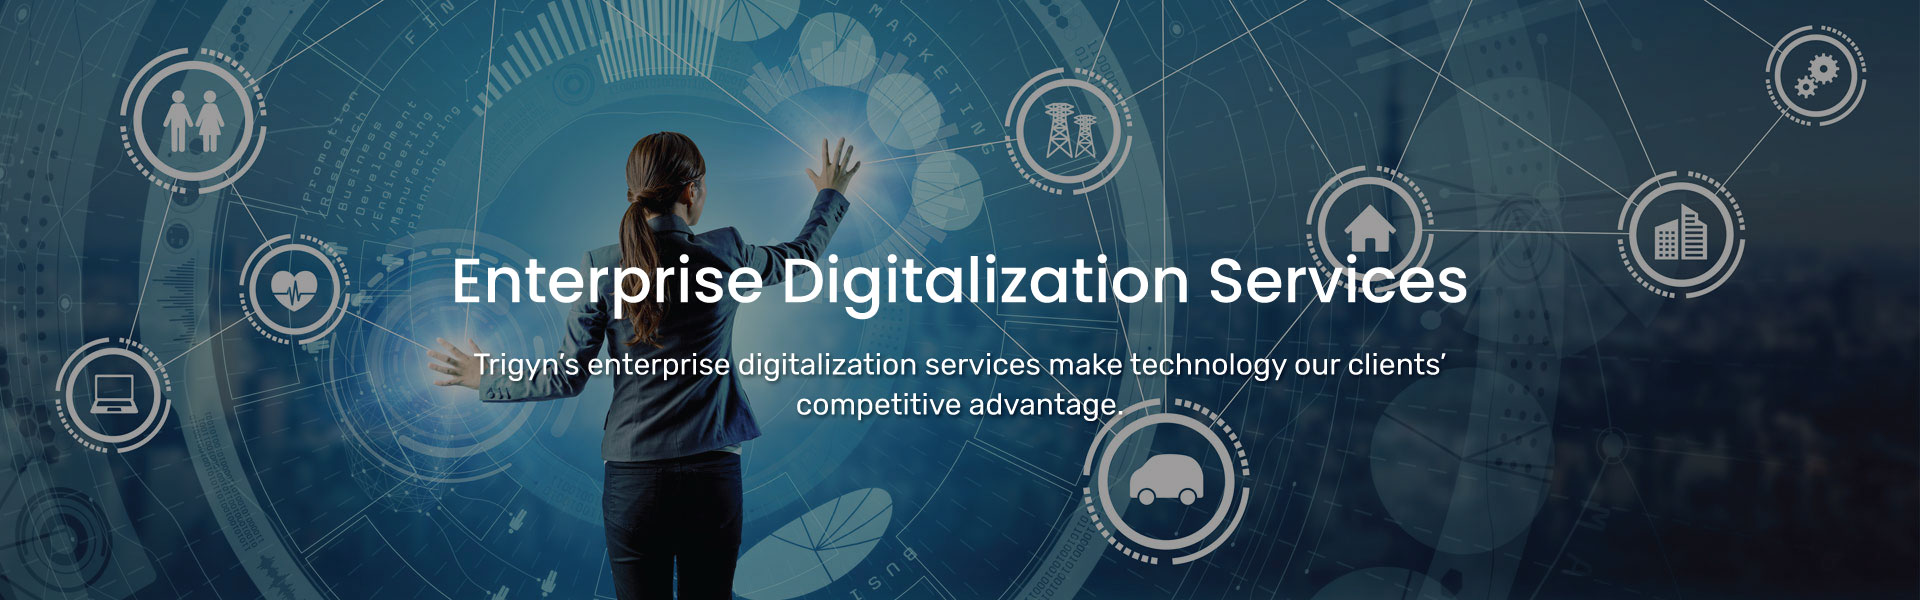 Trigyn’s Enterprise Digitalization Services